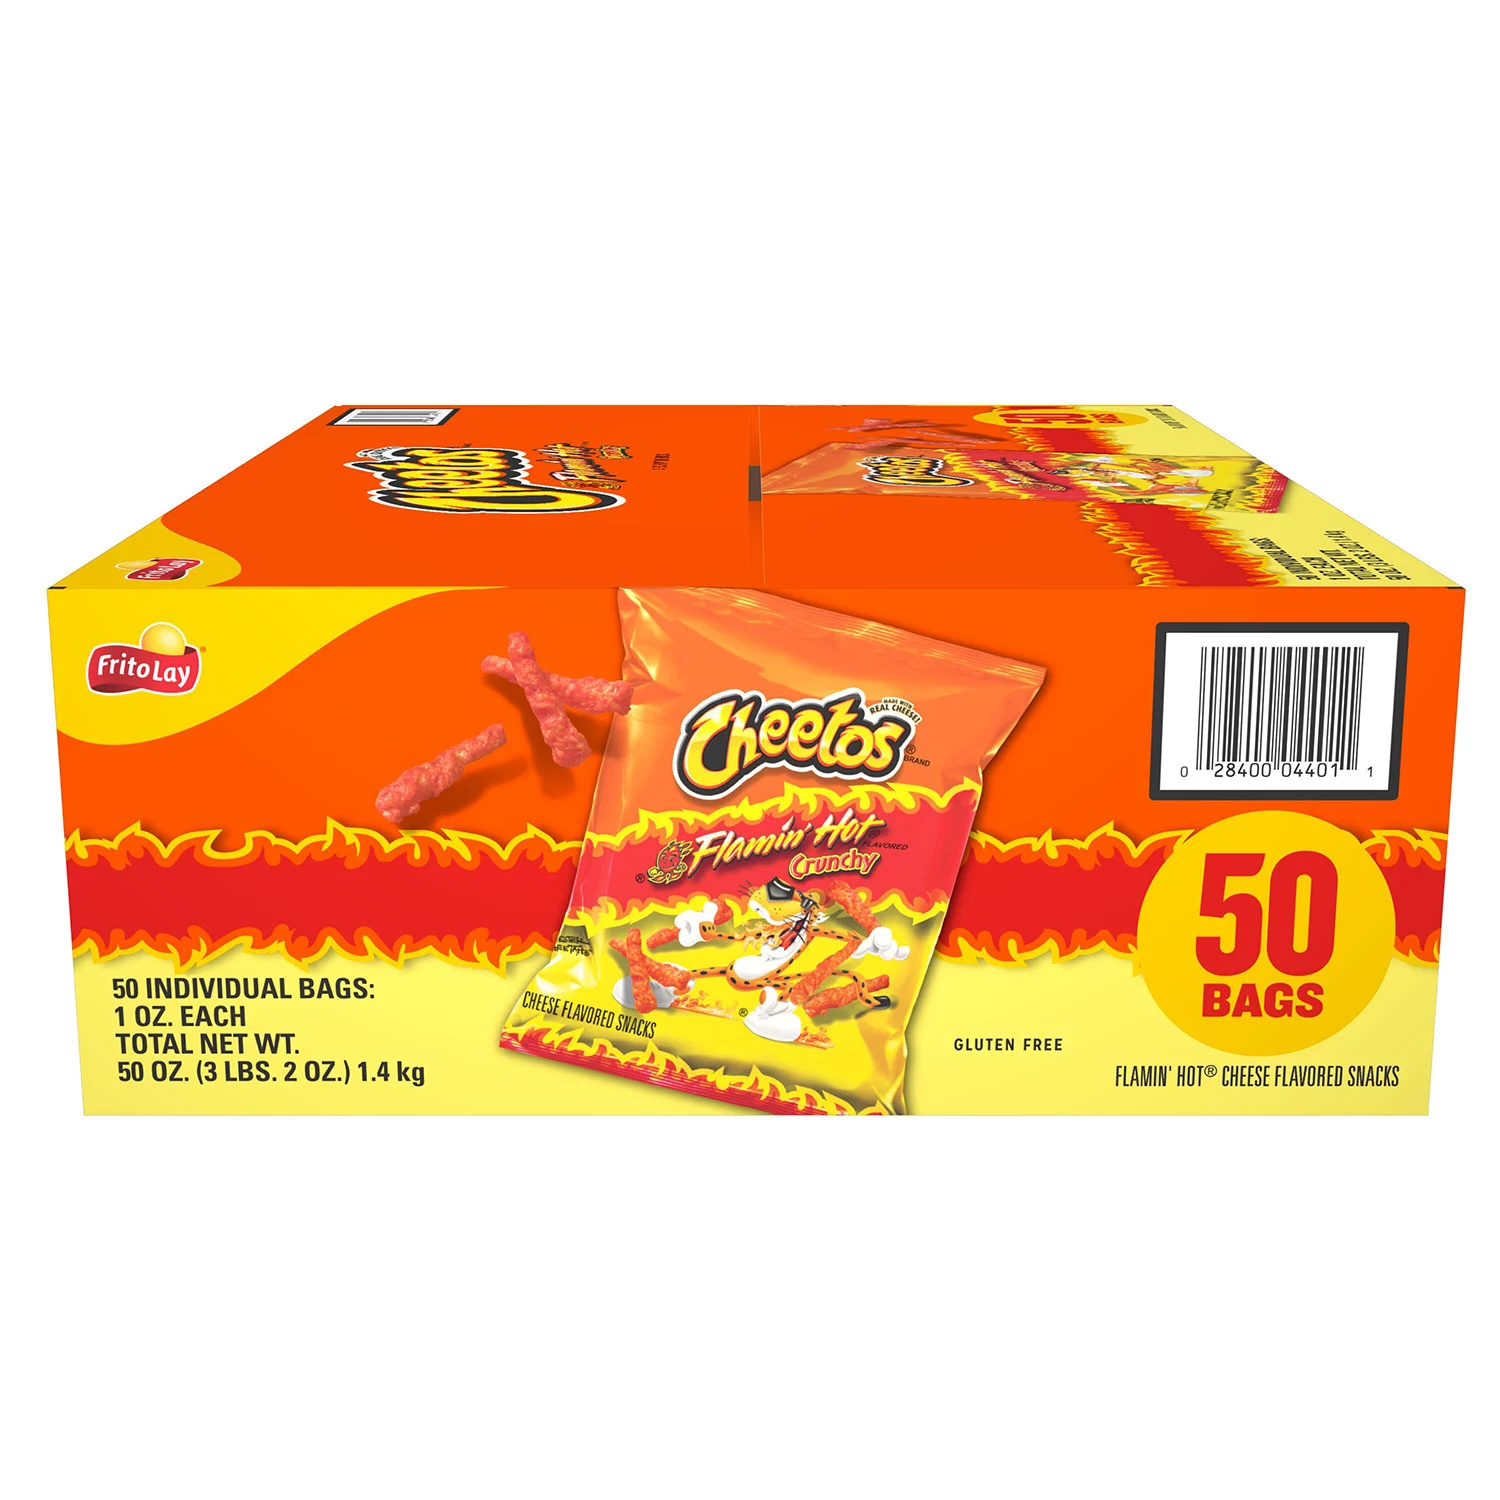 Cheetos Flamin' Hot Crunchy Snacks